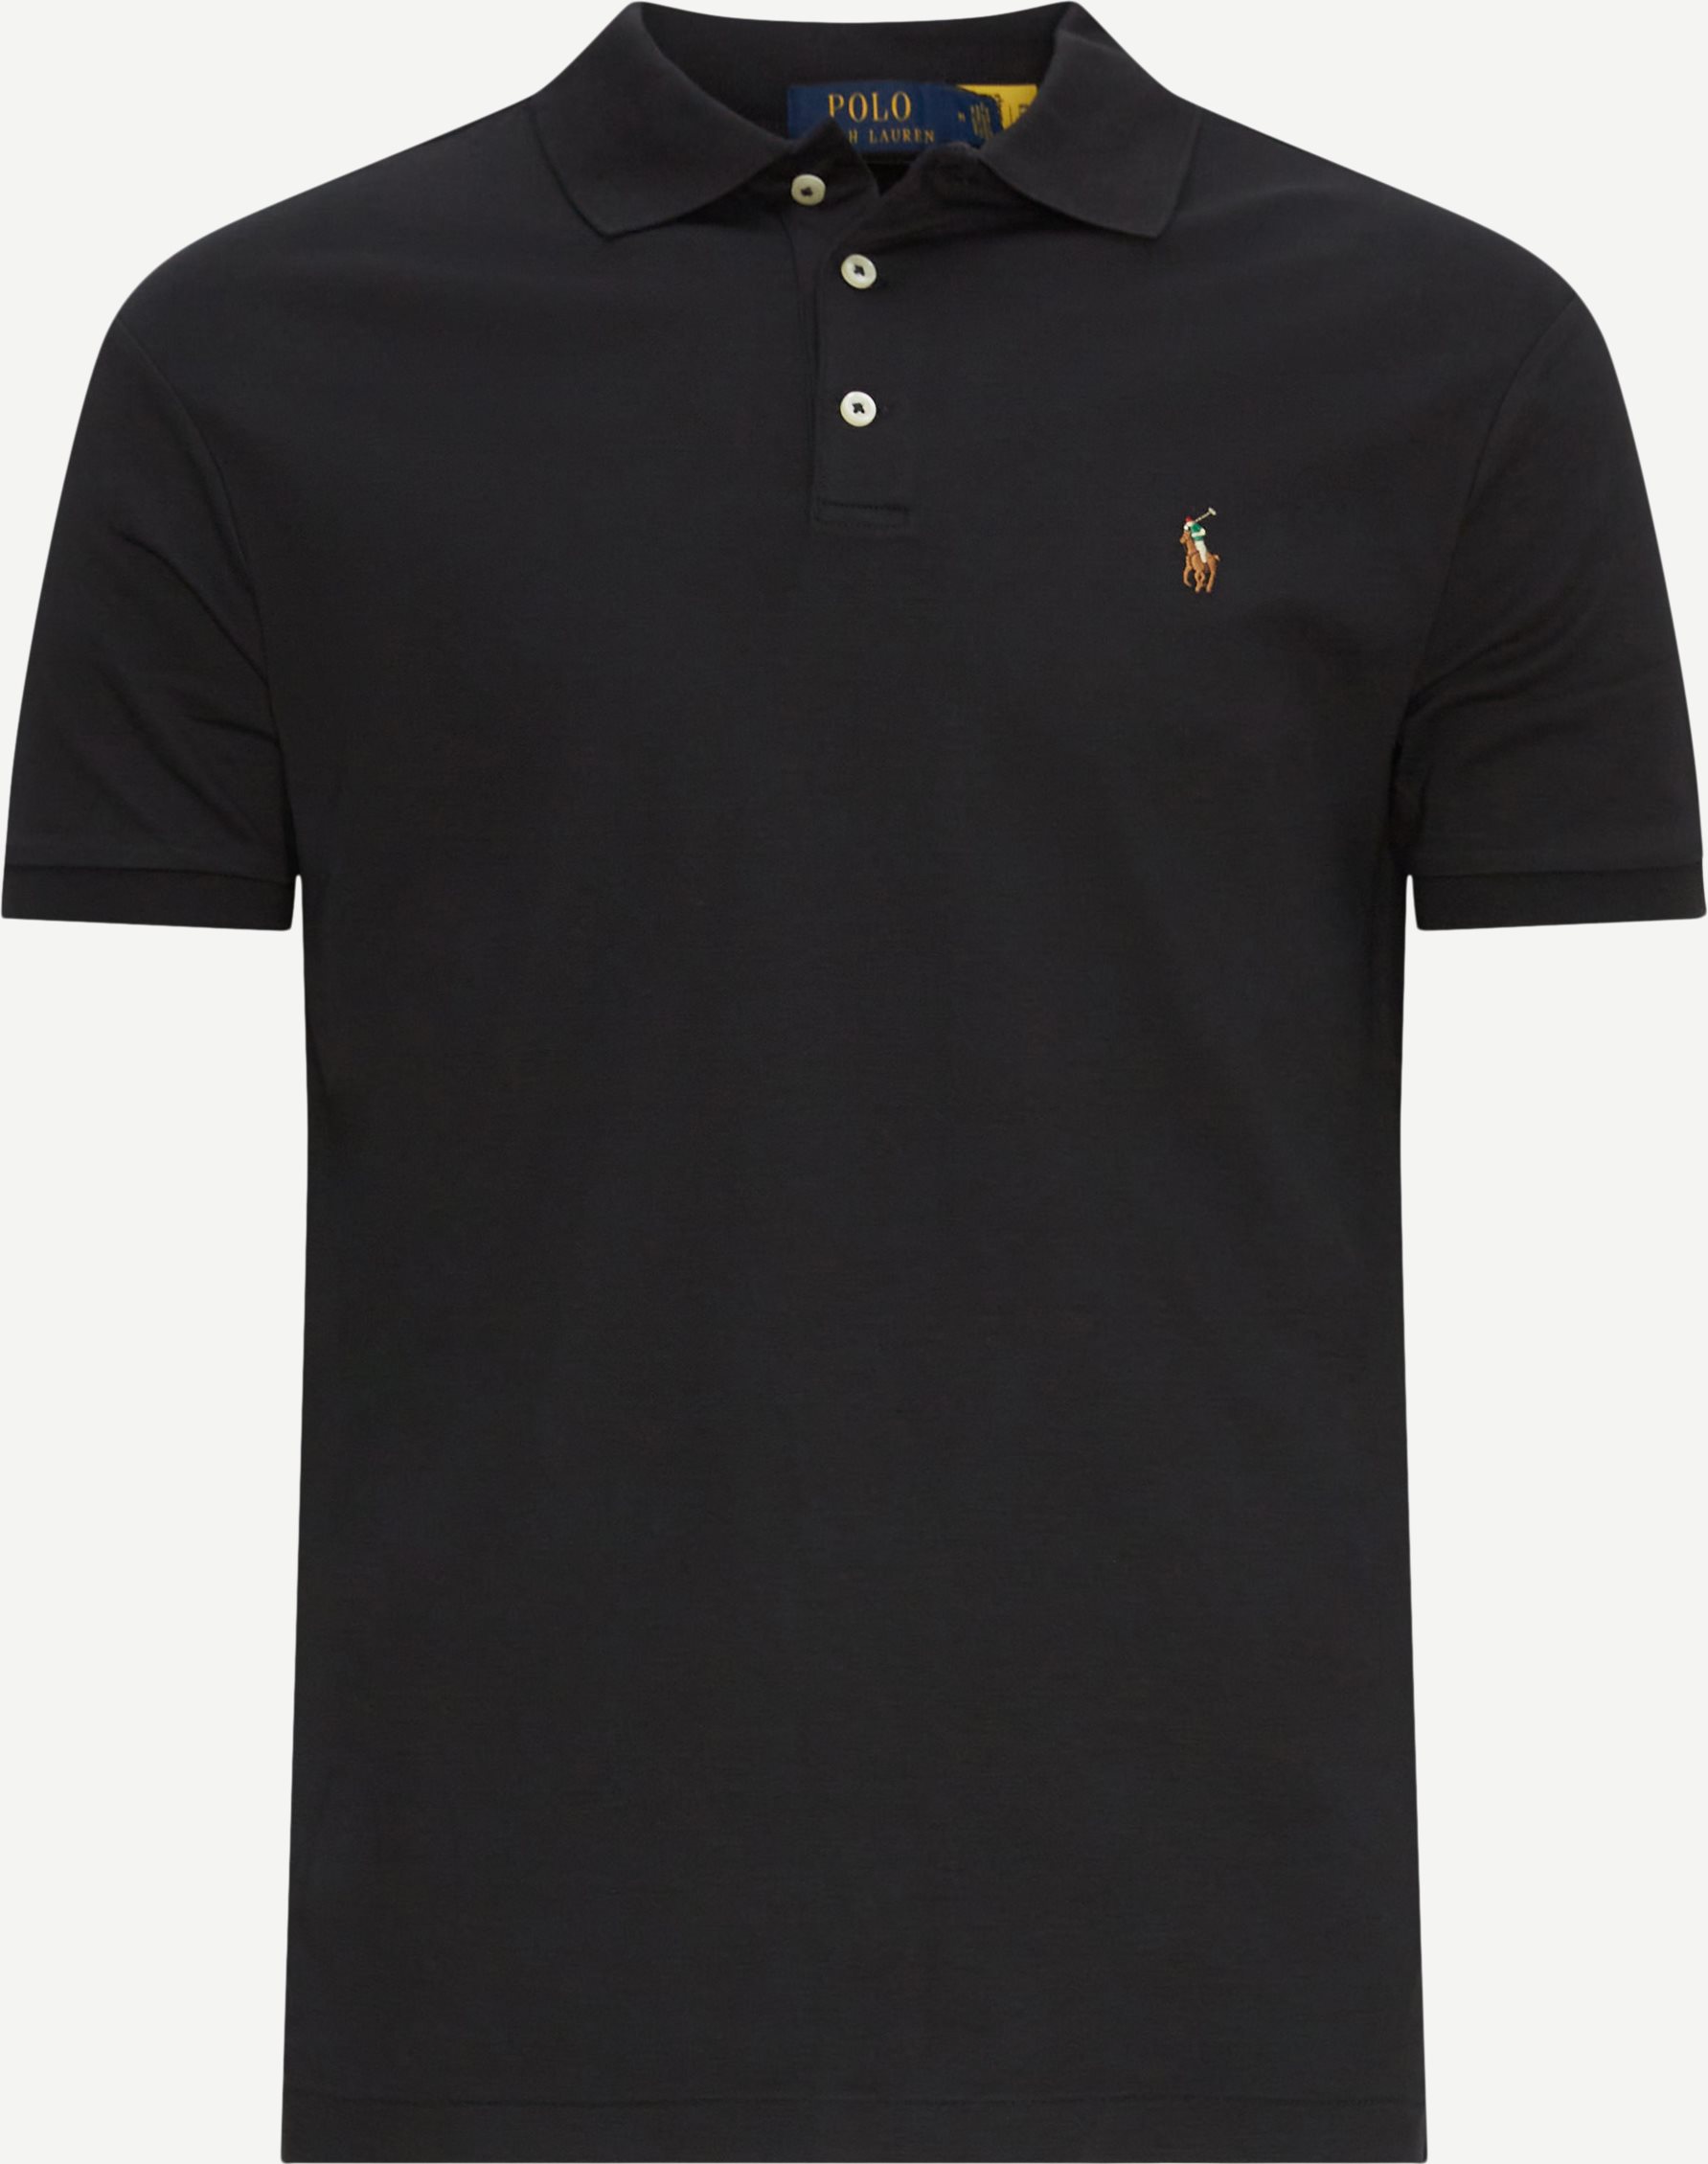 Polo Ralph Lauren T-shirts 710704319/710713130 Black